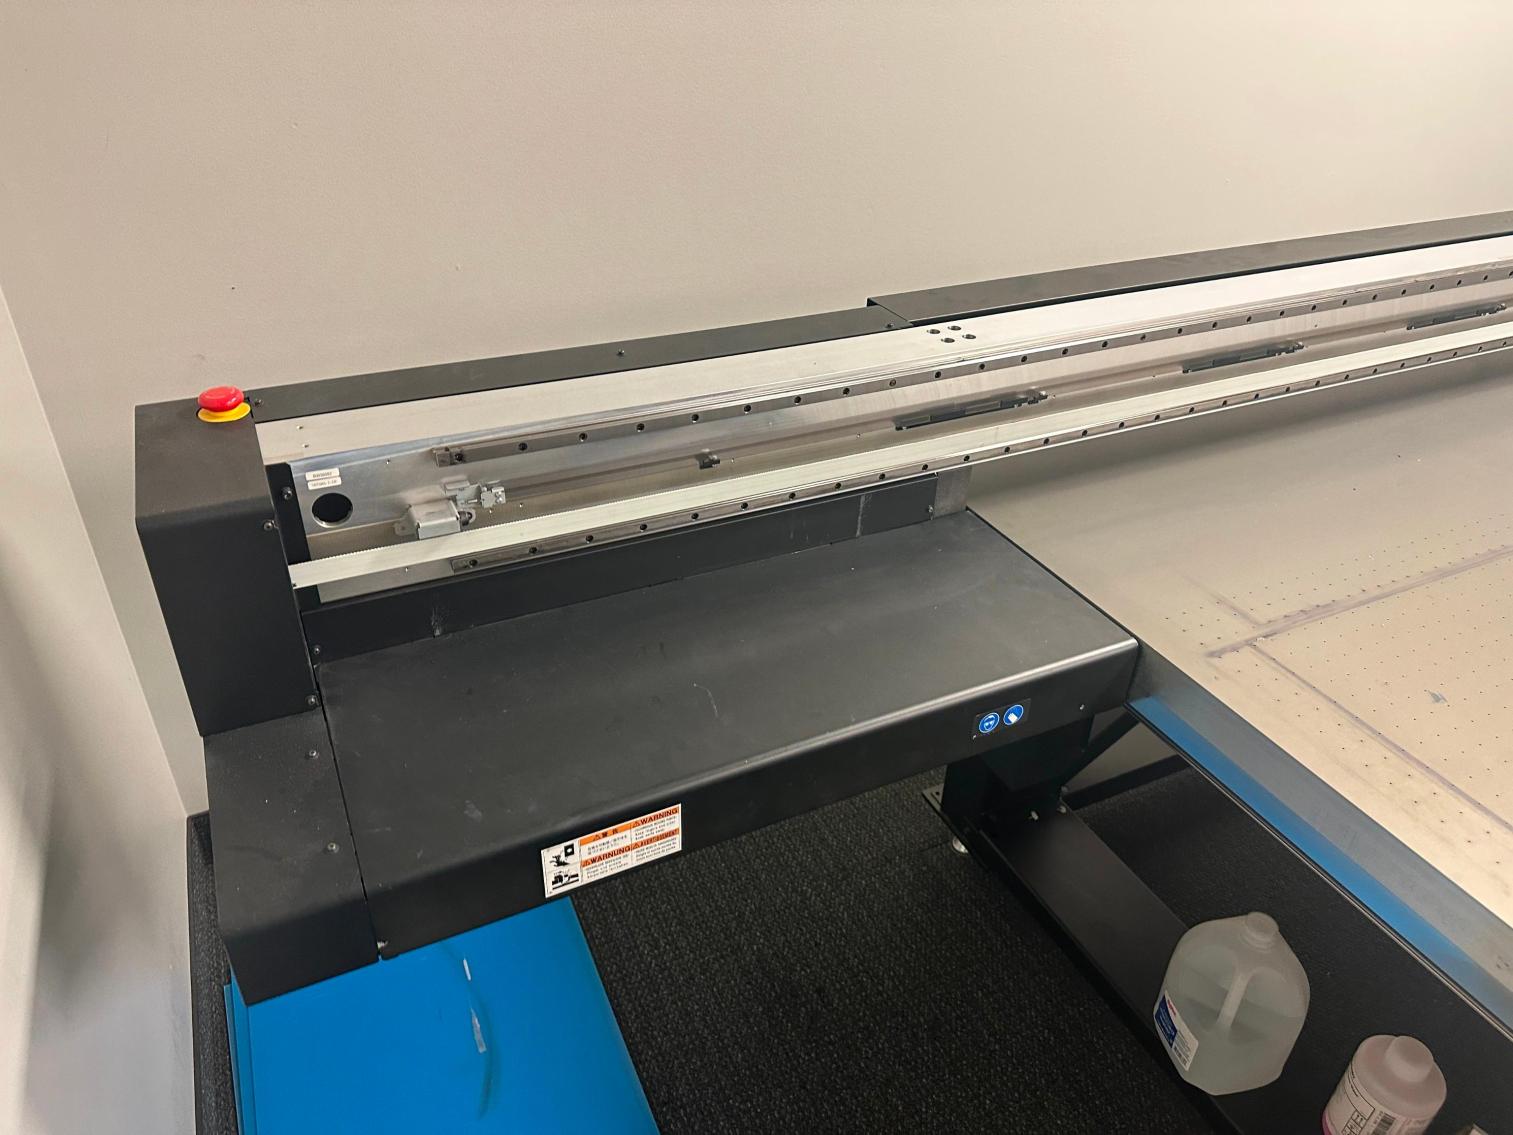 2019 Mimaki JFX 200-2513EX Large Format Flatbed Printer